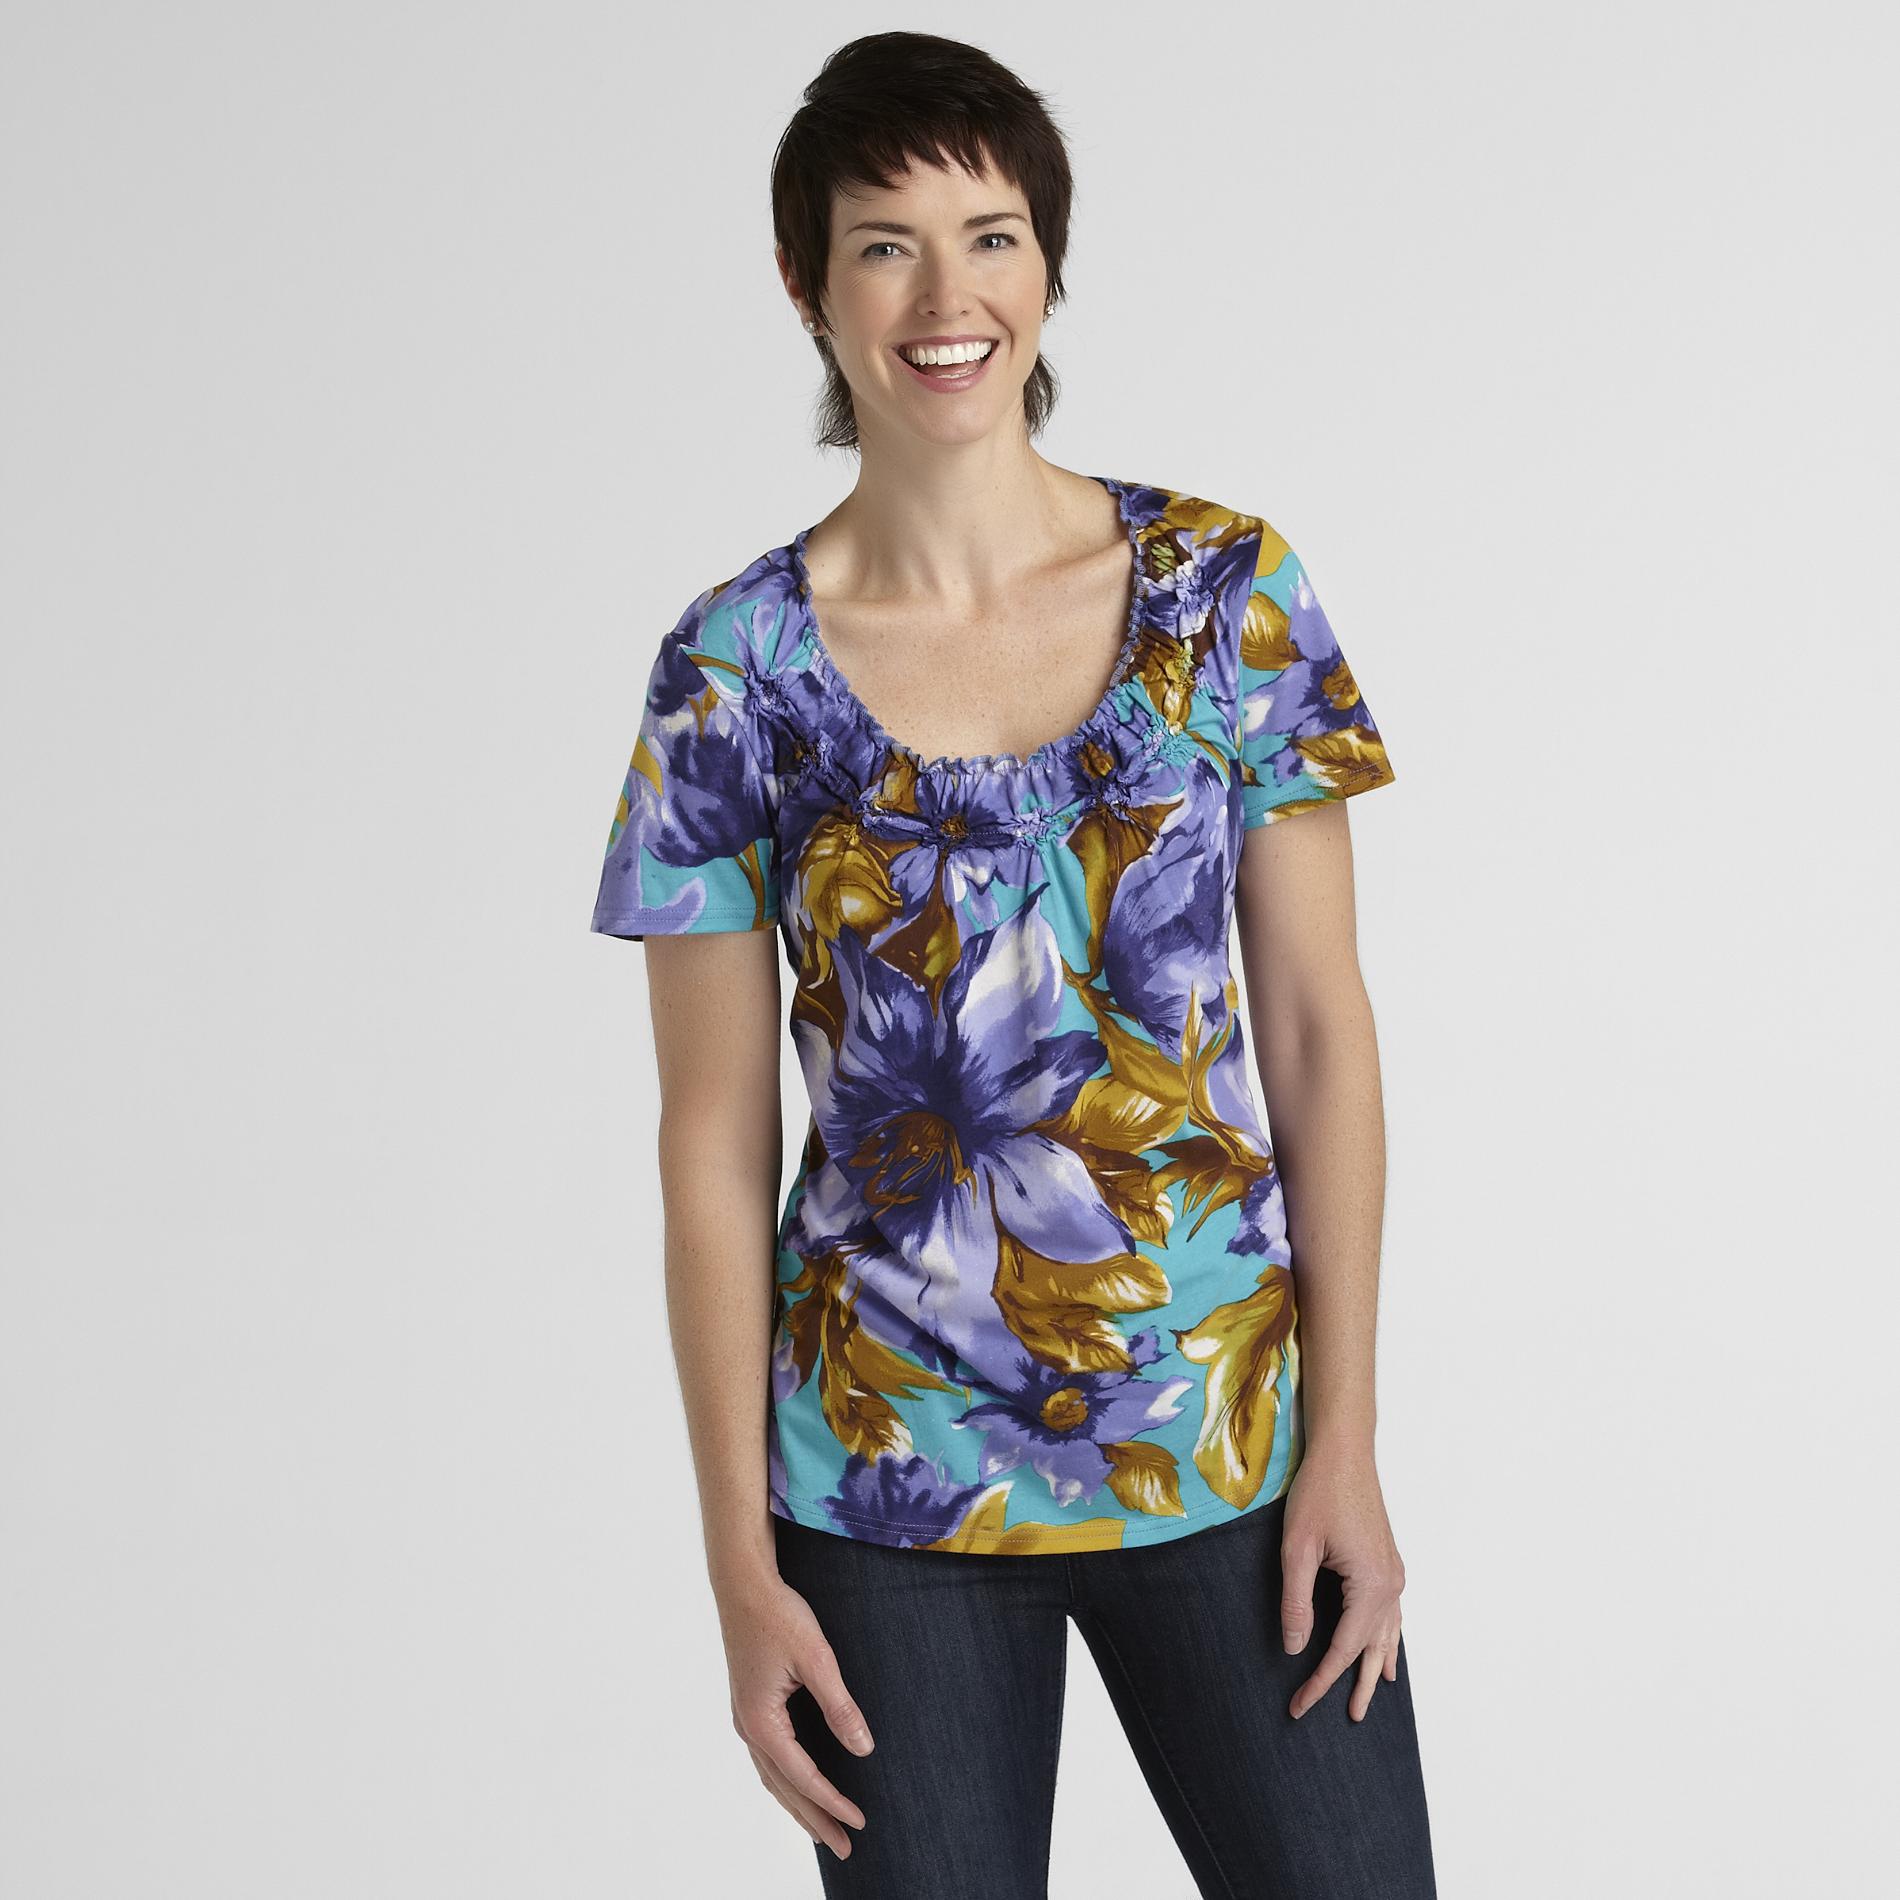 CJ BREEZE Women's Ruffle T-Shirt - Floral